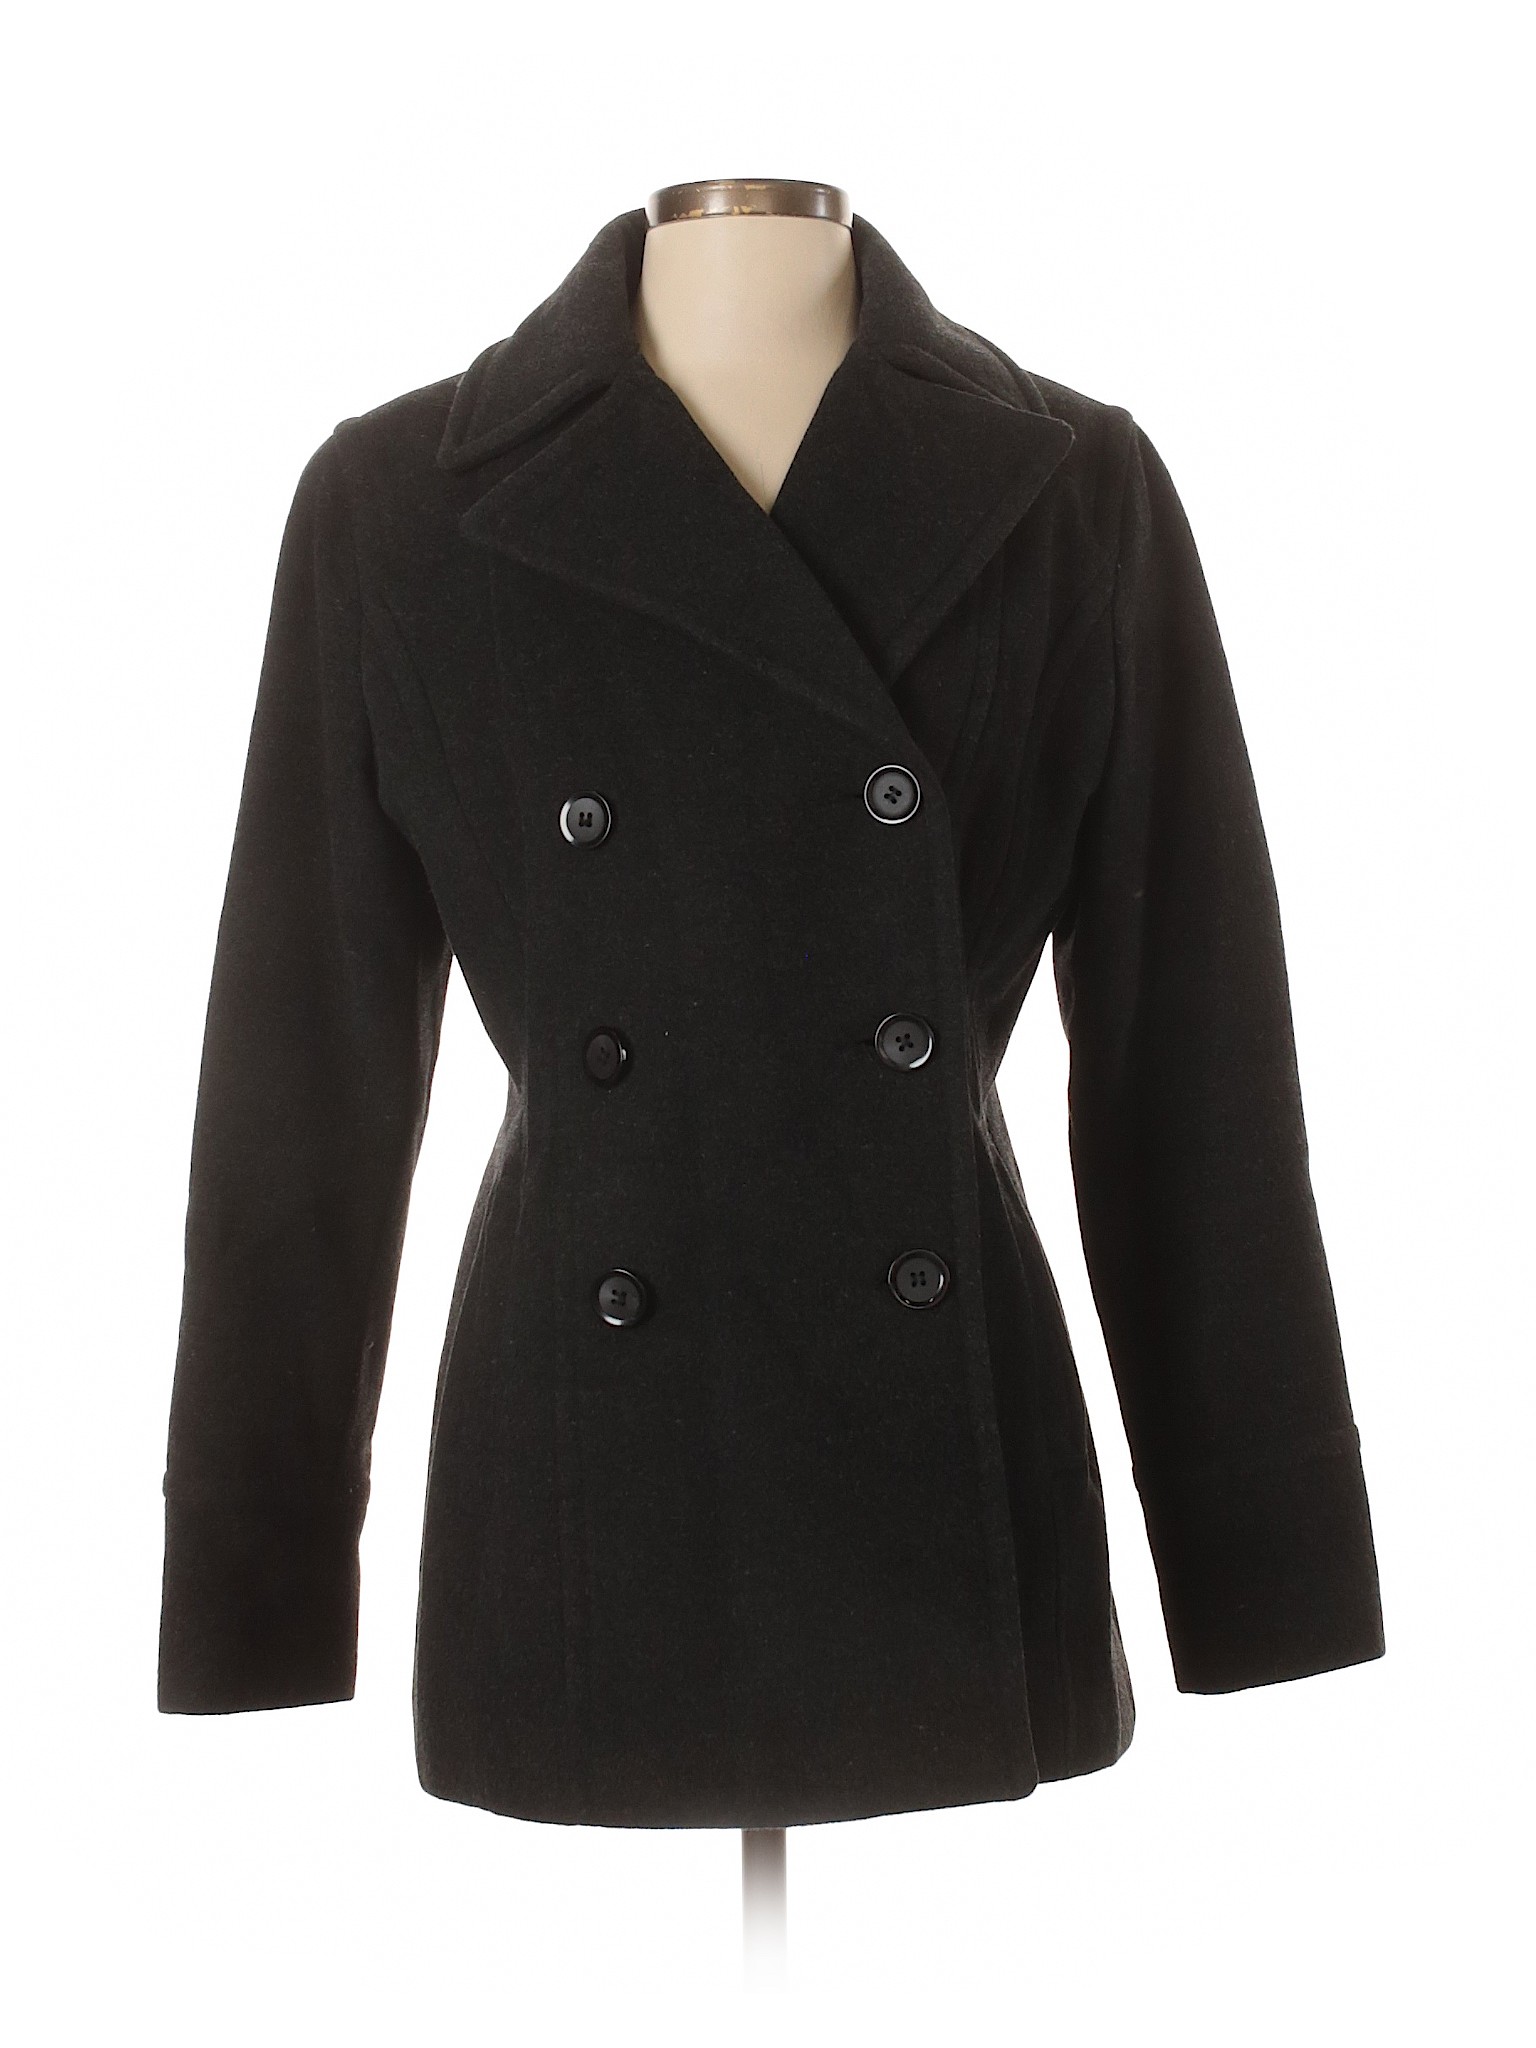 MICHAEL Michael Kors Women Black Wool Coat S | eBay